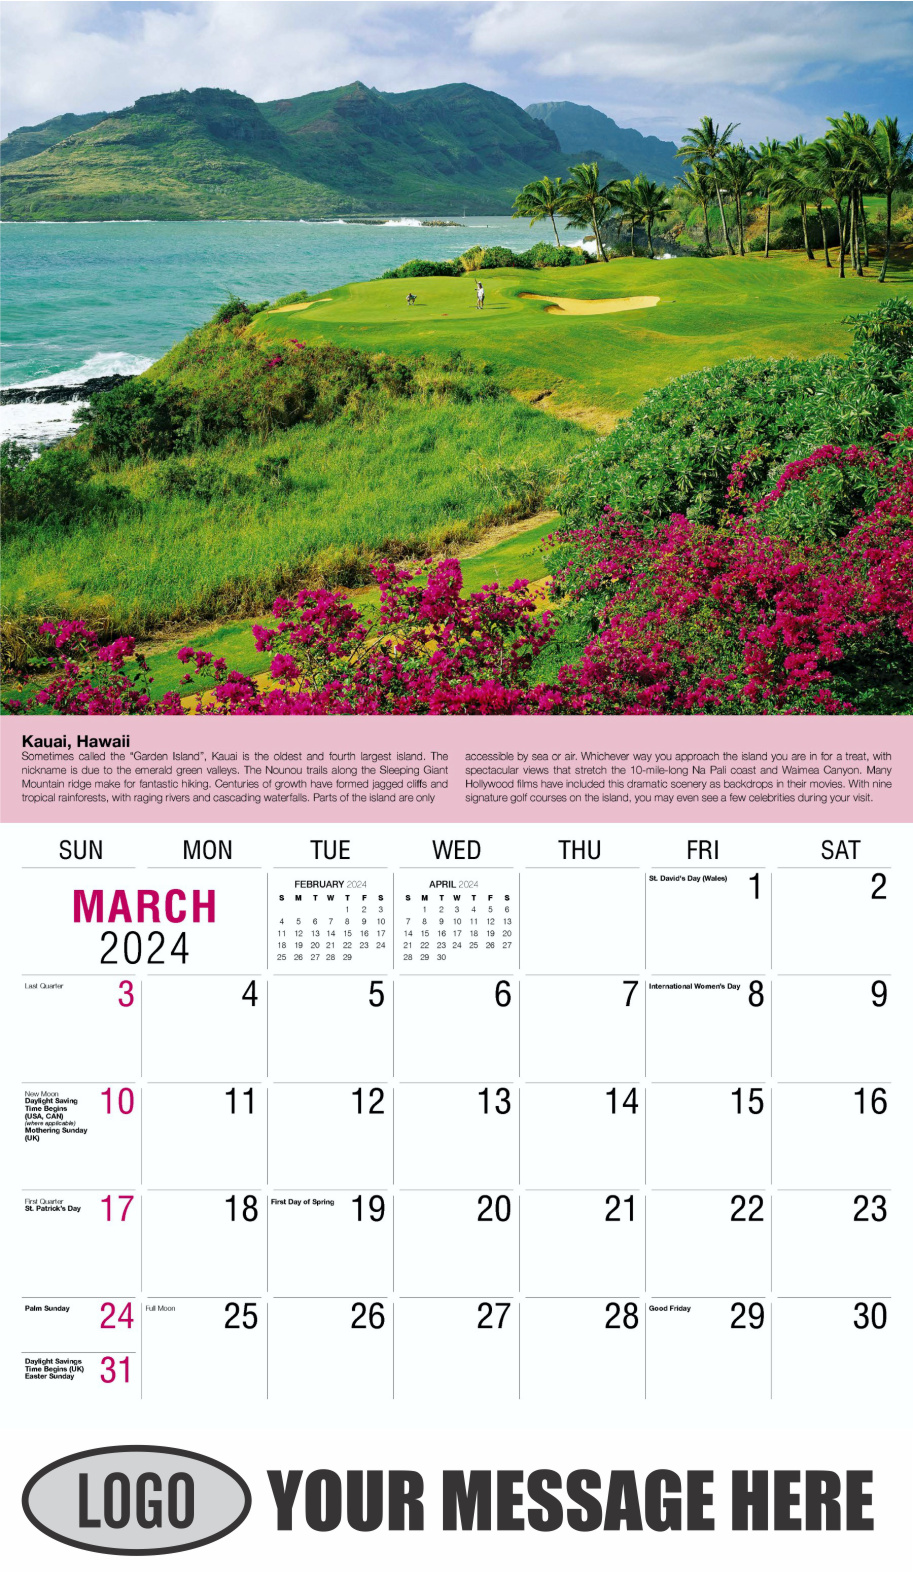 World Travel 2024 Business Advertising Wall Calendar - March